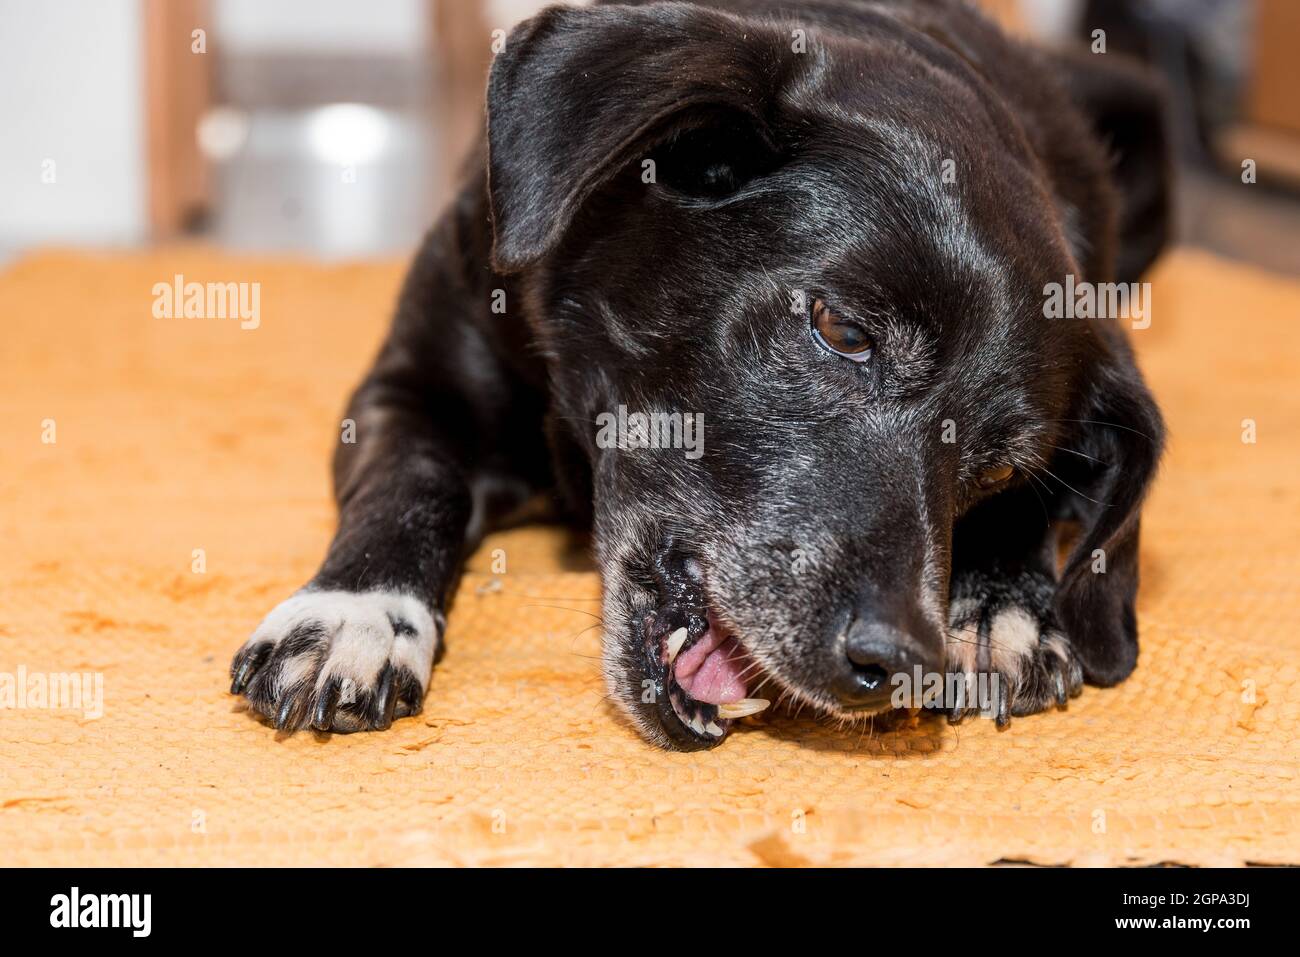 schwarzer Hund kaut an seinem Hundeknochen - Nahaufnahme Zahnpflege Stock Photo